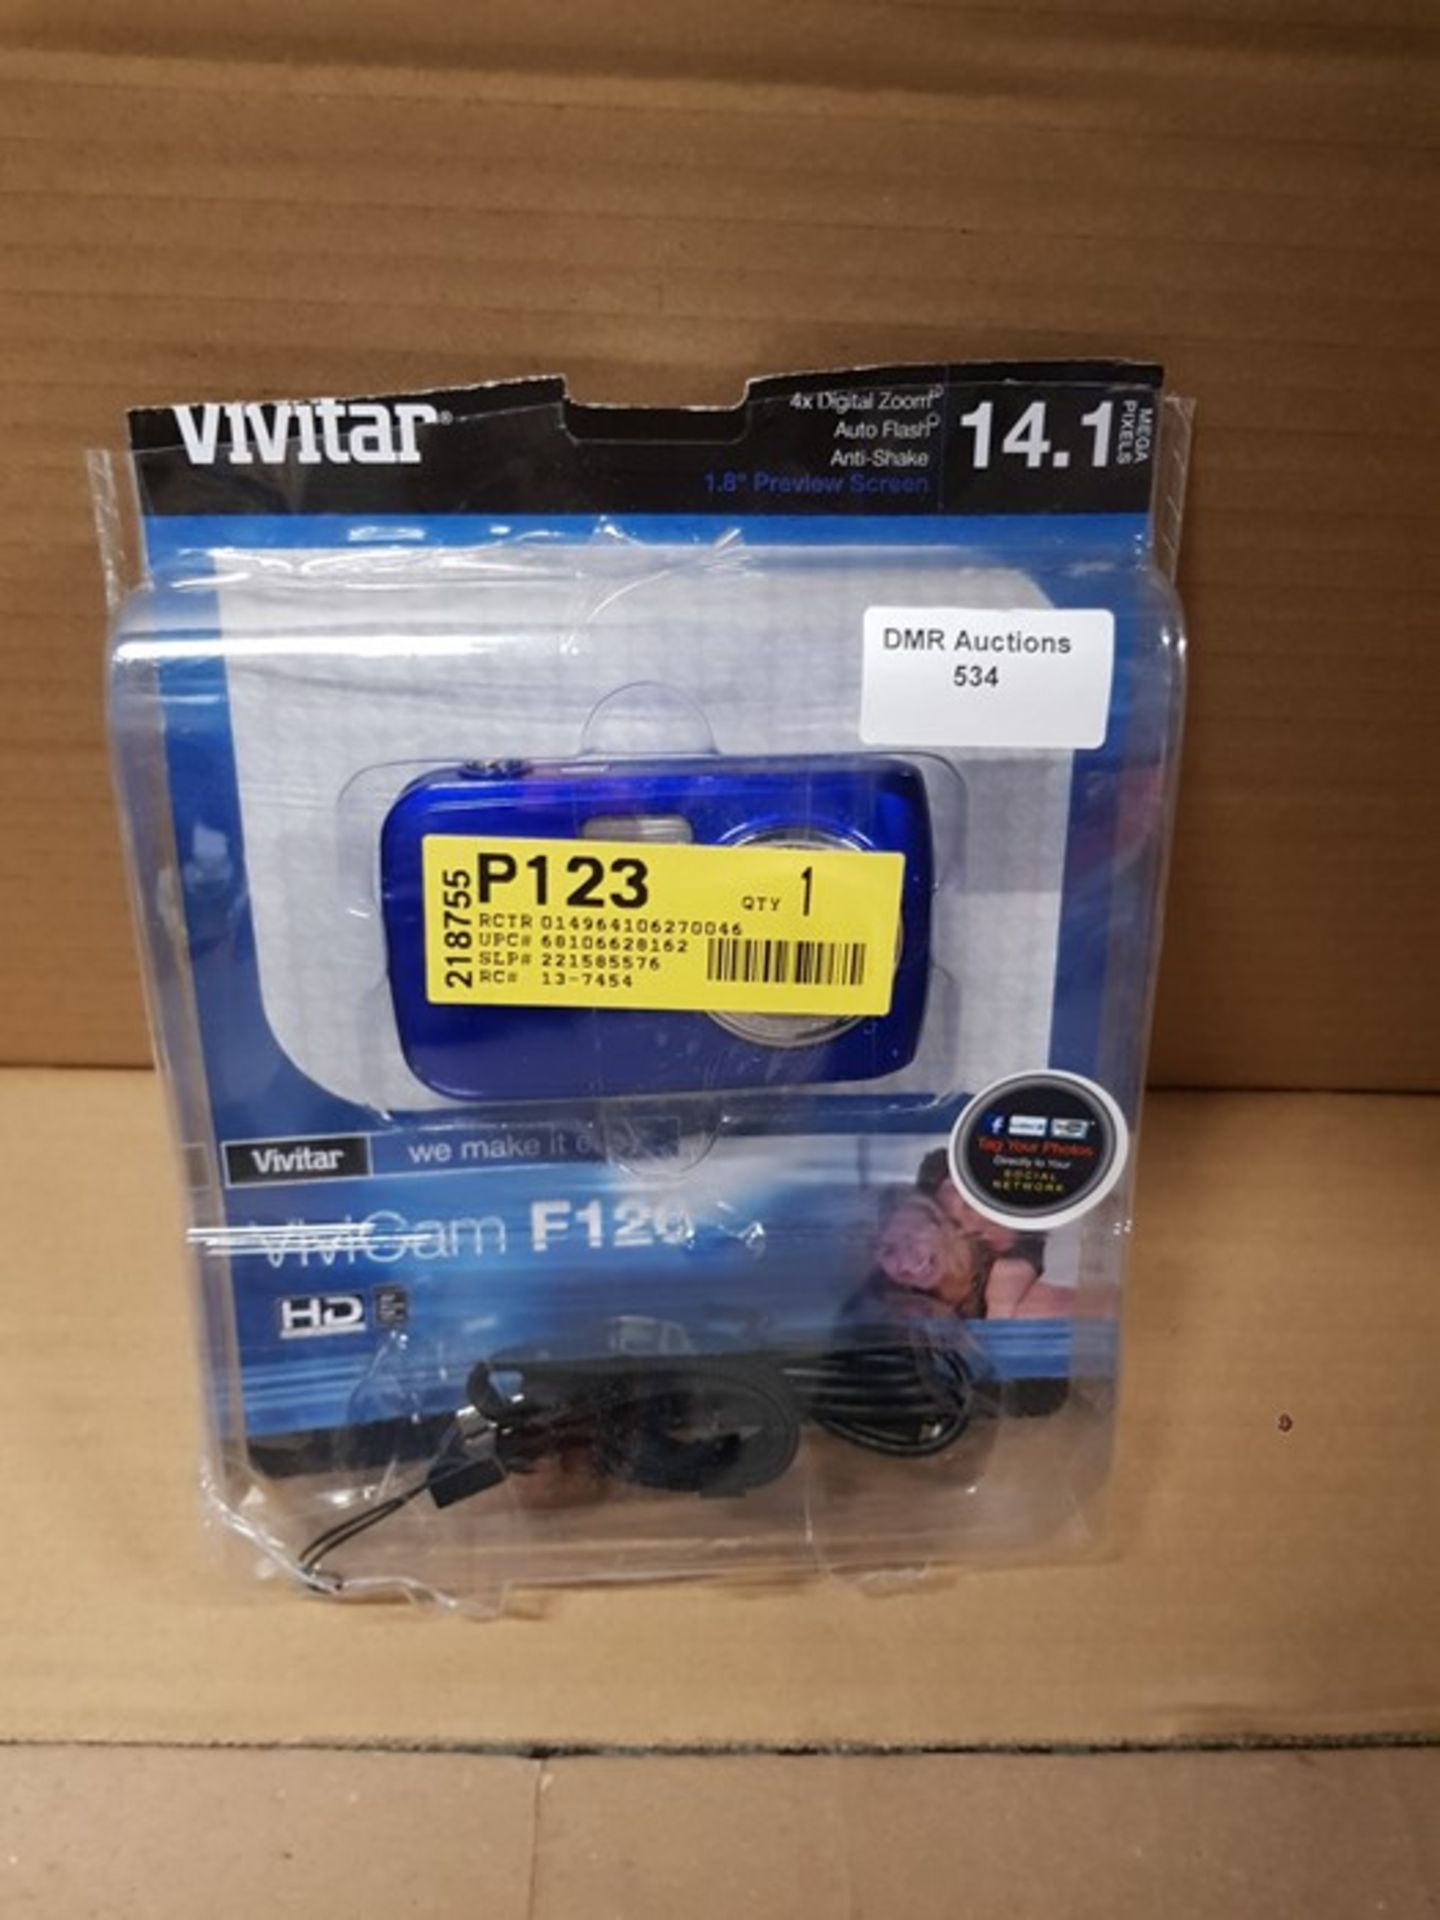 1 BOXED VIVTAR F126 HD DIGITAL CAMERA / RRP £38.86 / BL - 8755 (PUBLIC VIEWING AVAILABLE)